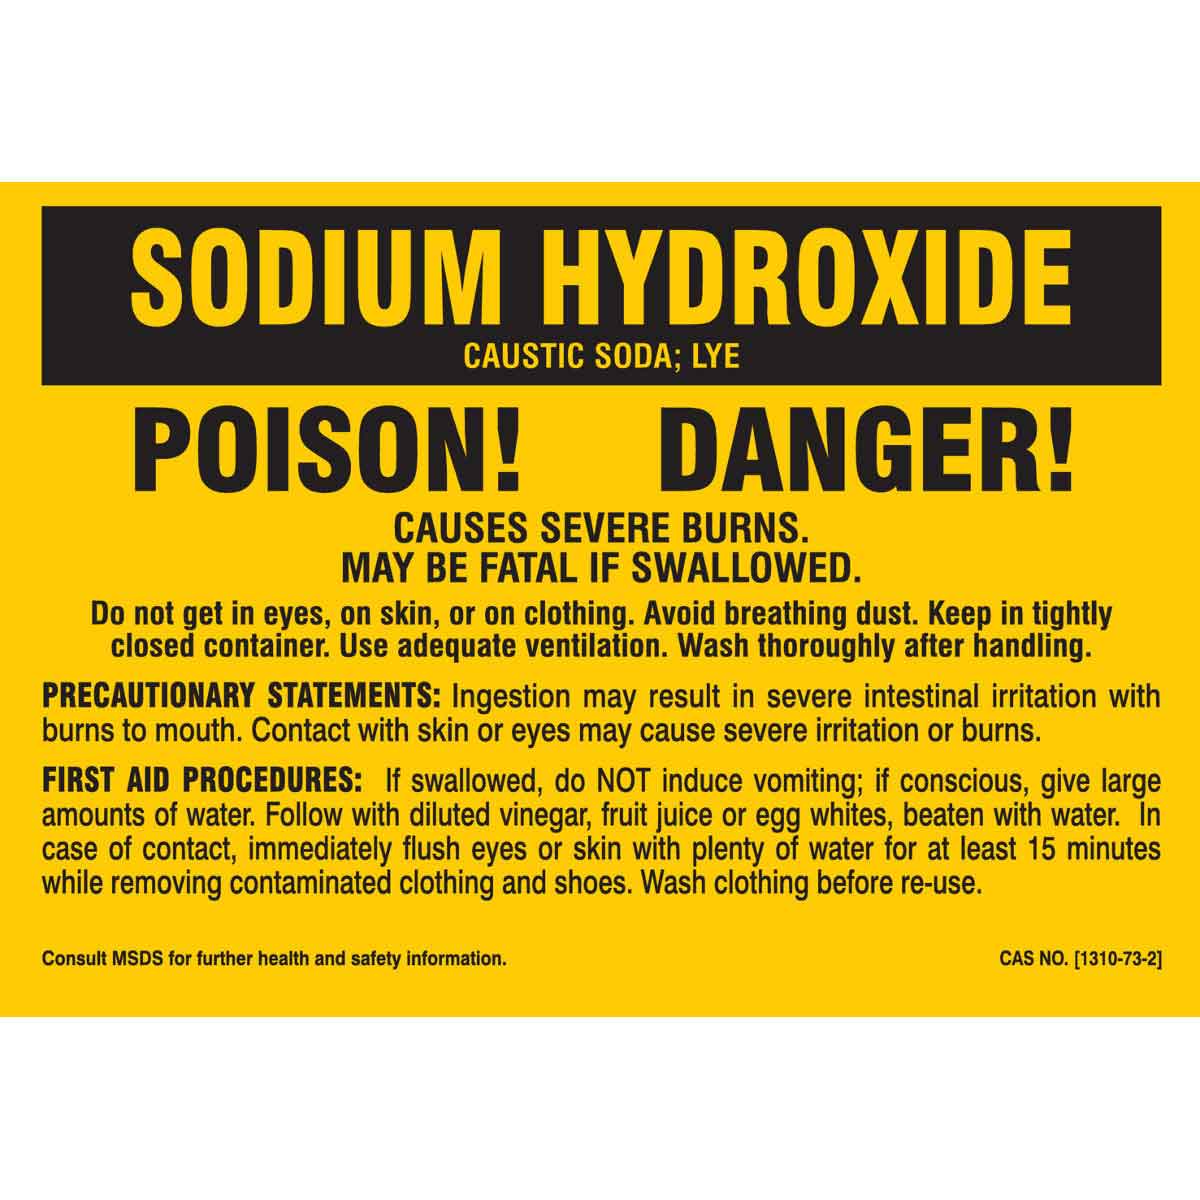 Sodium Hydroxide Poison Danger Labels Brady Part 7309pls Brady Bradyid Com